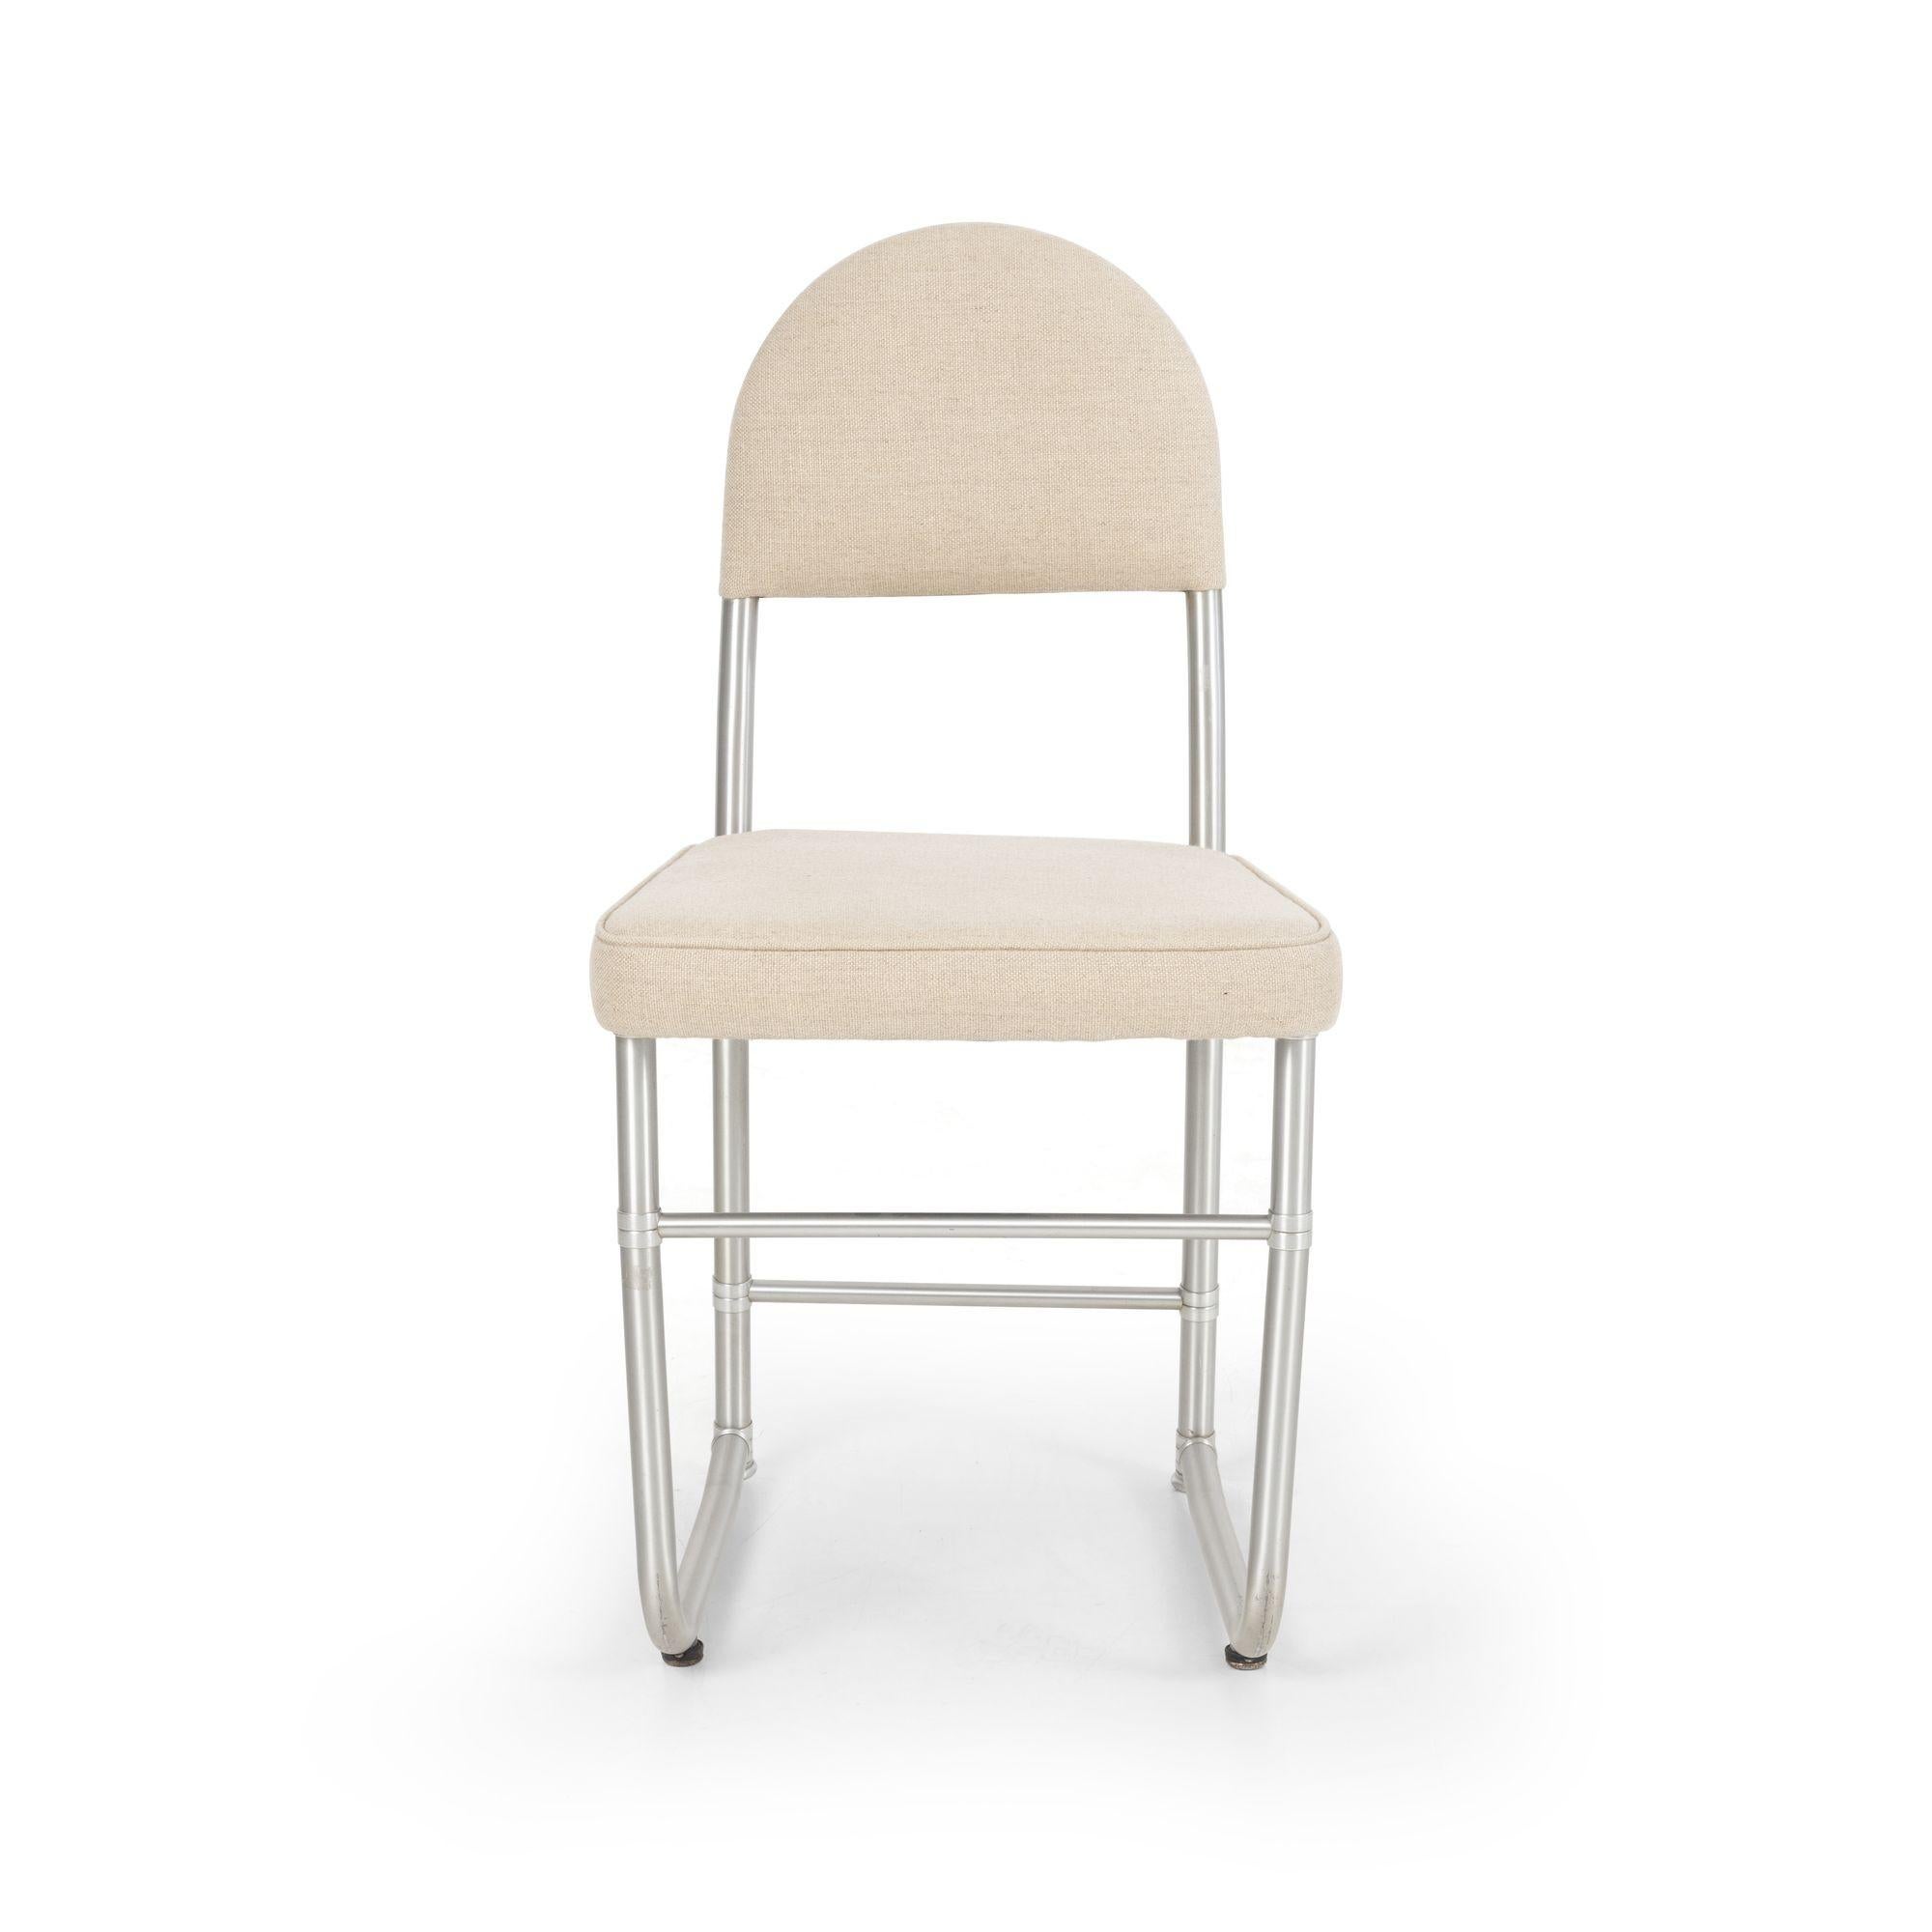 Warren McArthur Desk Chair, Aluminum frame with upholstrey.
Reupholstered
Seat height 20